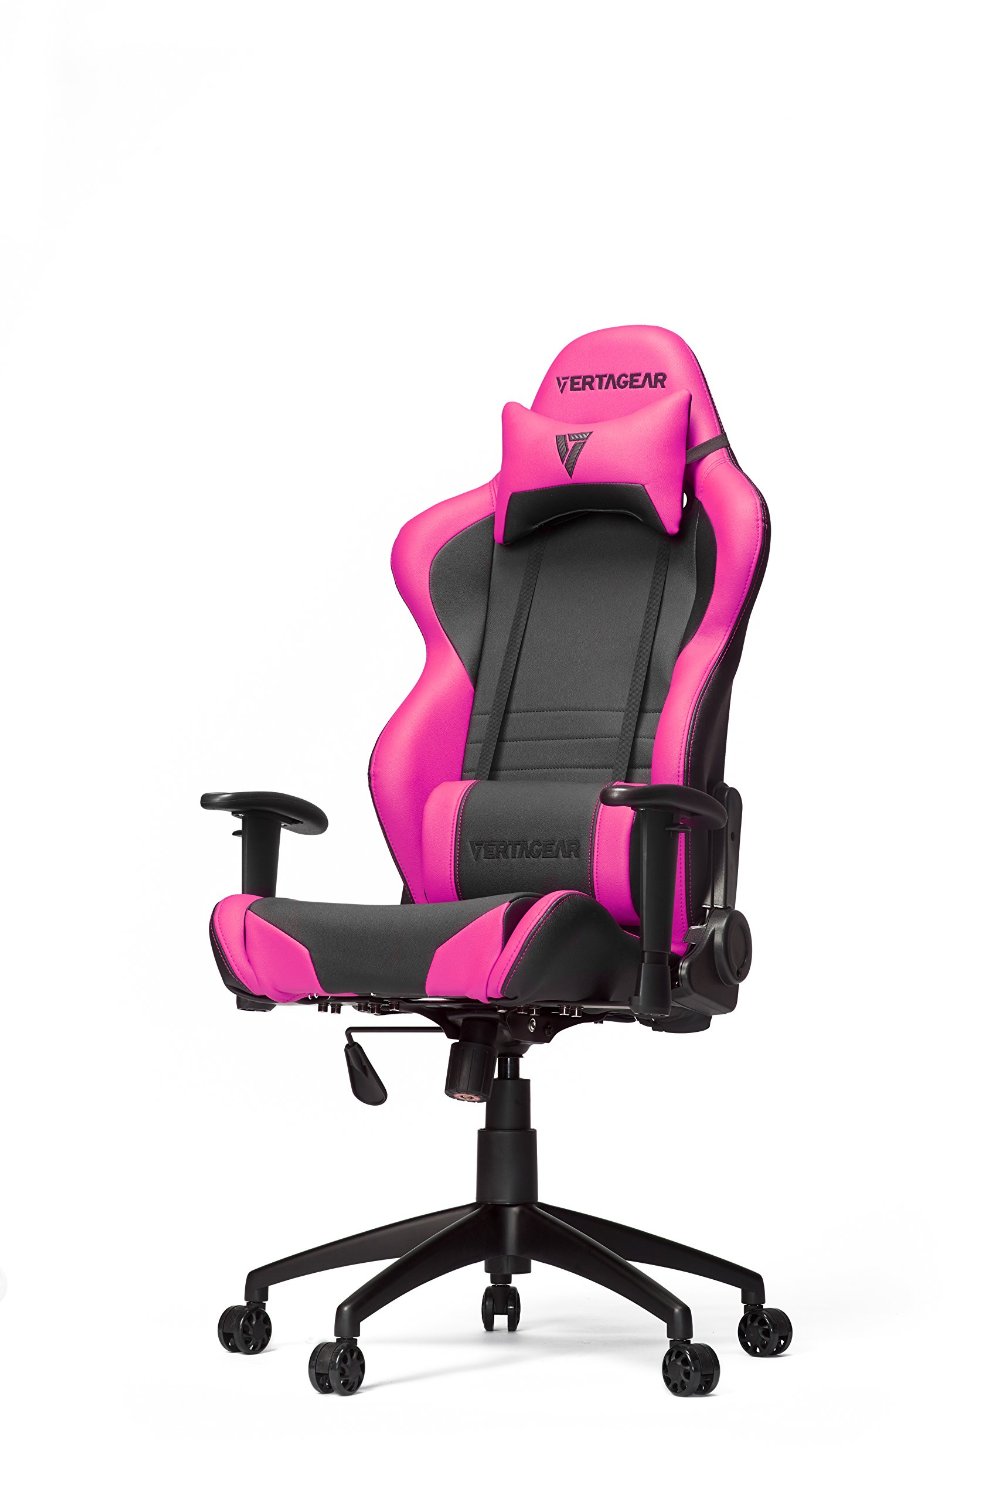 Vertagear Chair Pink Upright